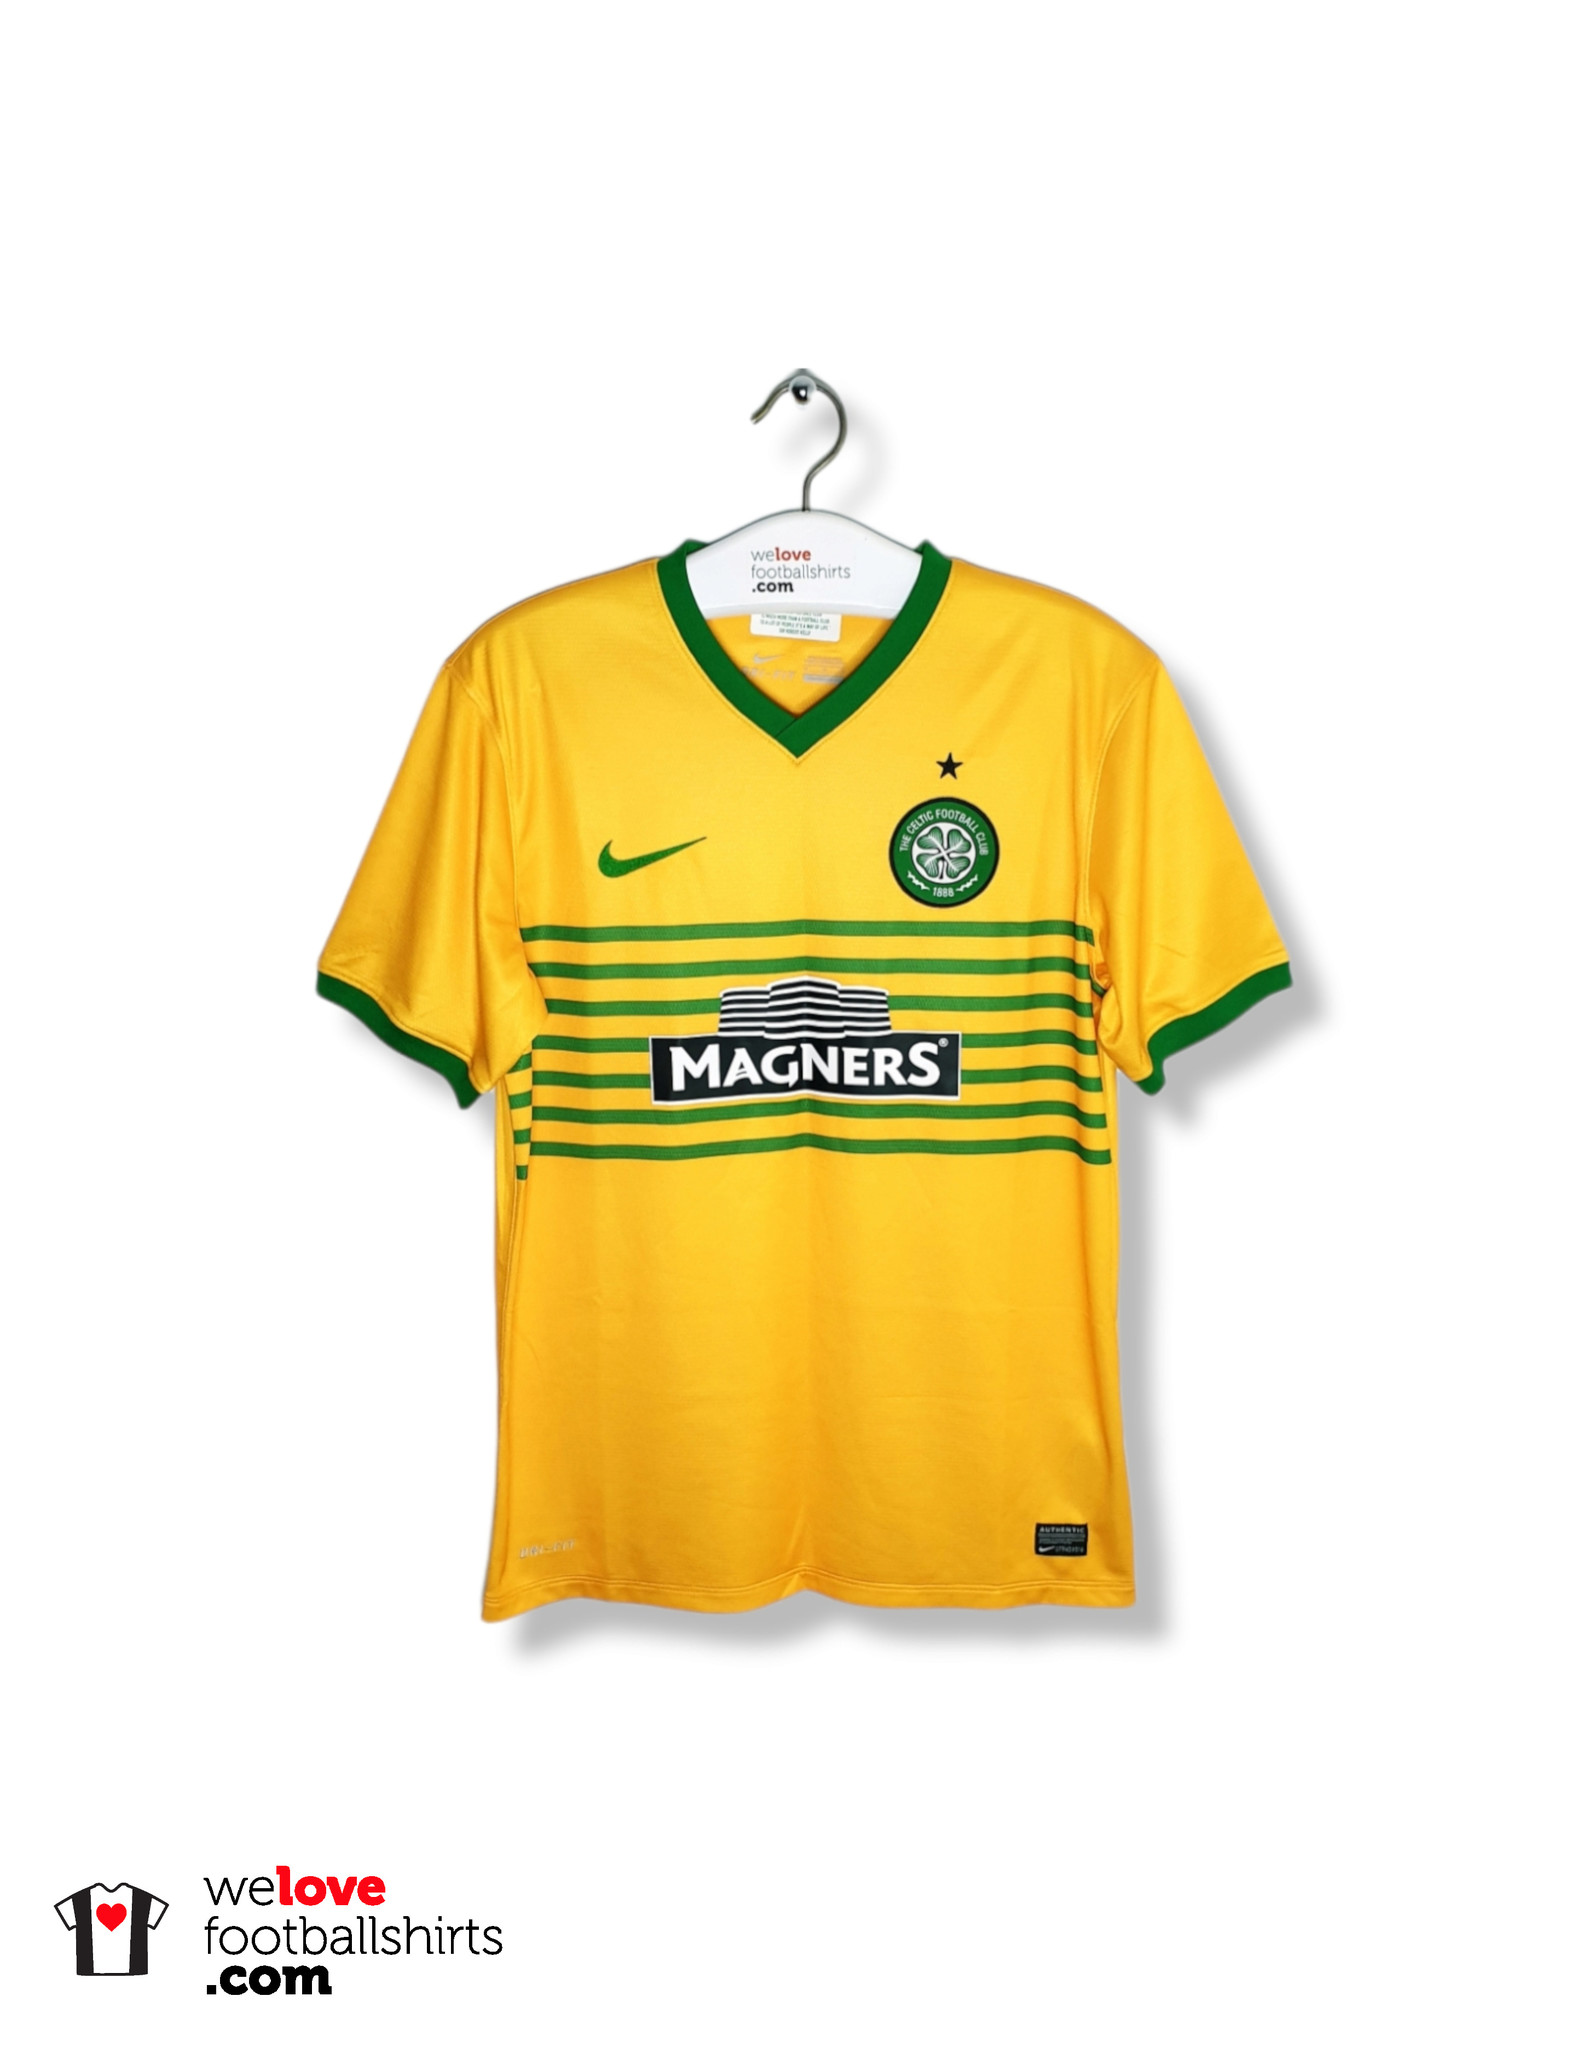 Bloquear Brillante tofu Nike Football Shirt Celtic 2013/14 - Welovefootballshirts.com